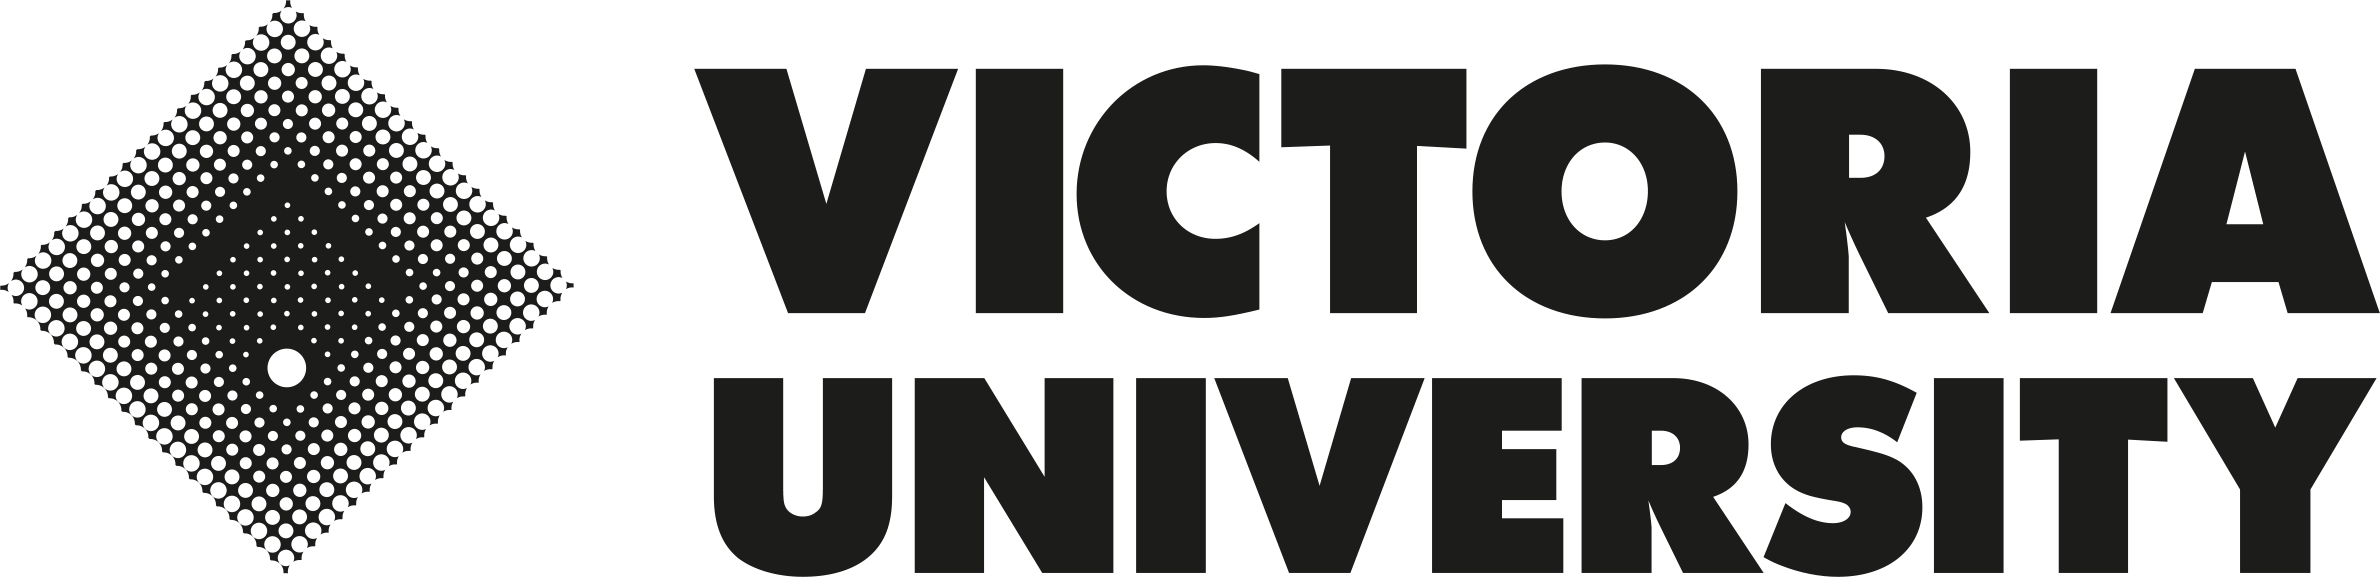 Victoria_University_Logo_Master_K_0